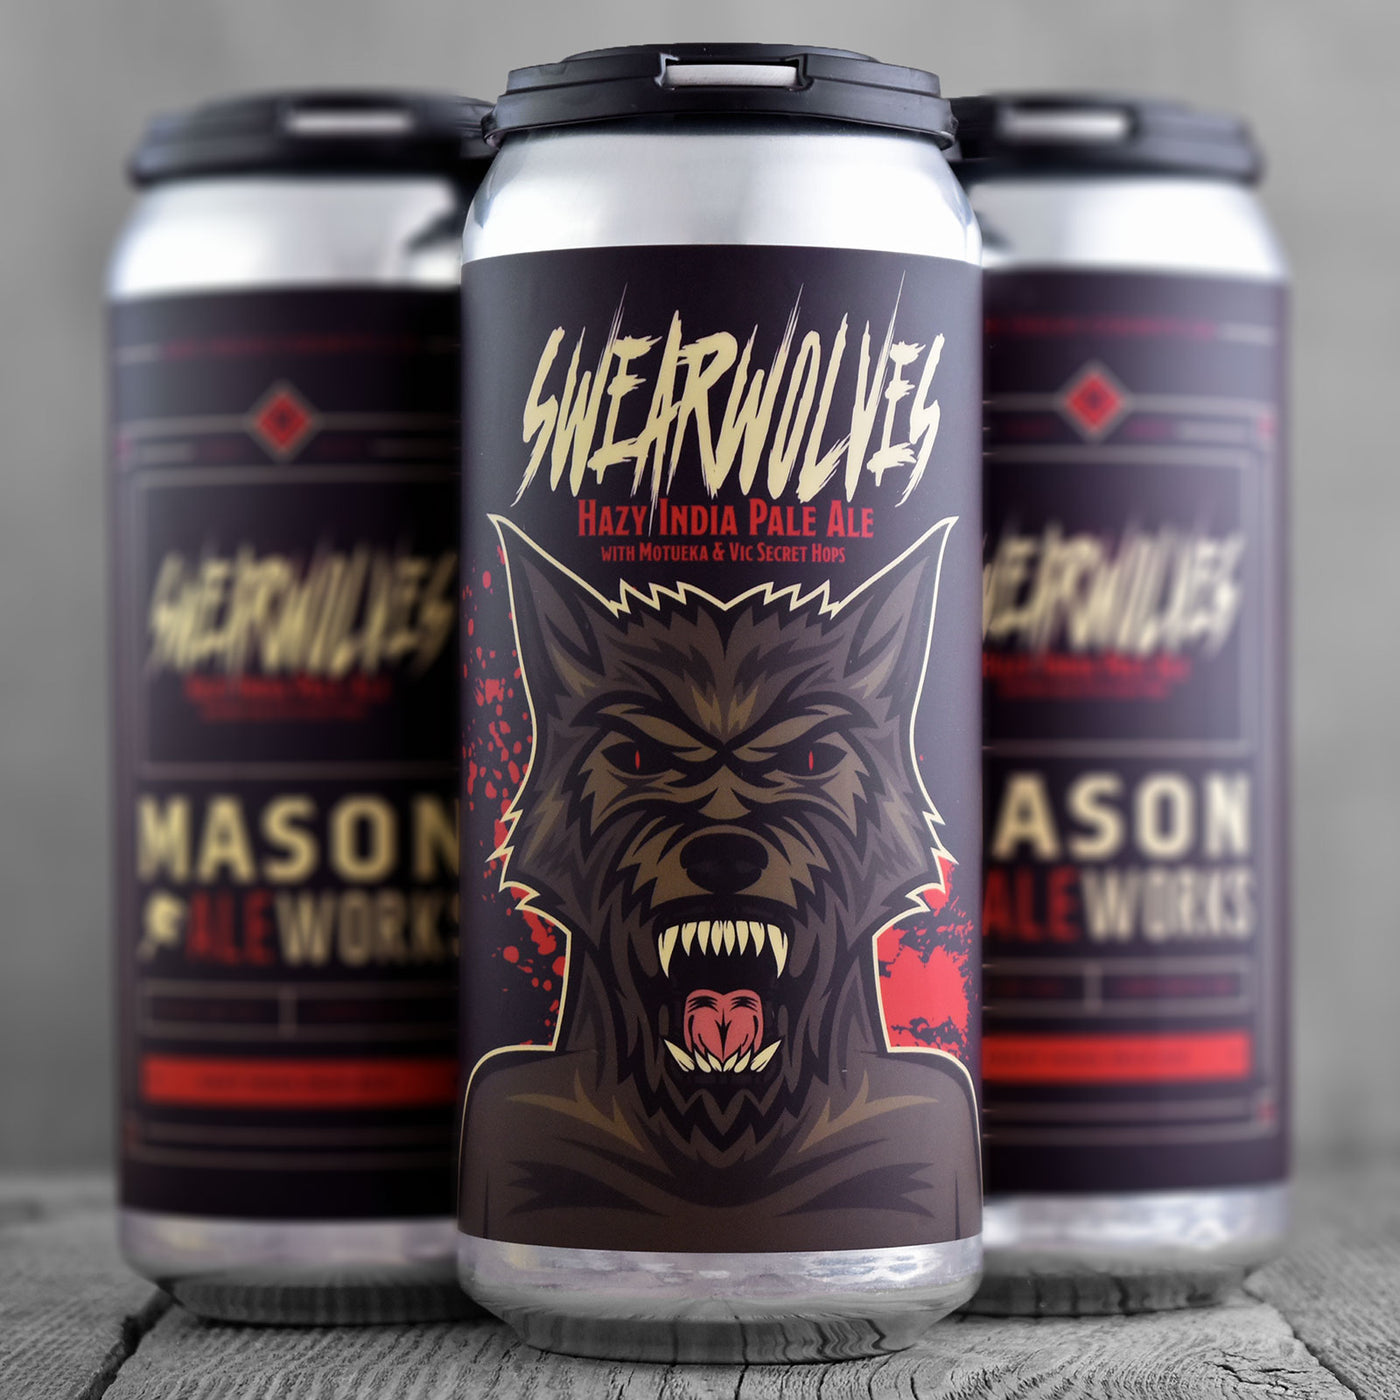 Mason Ale Works Swearwolves